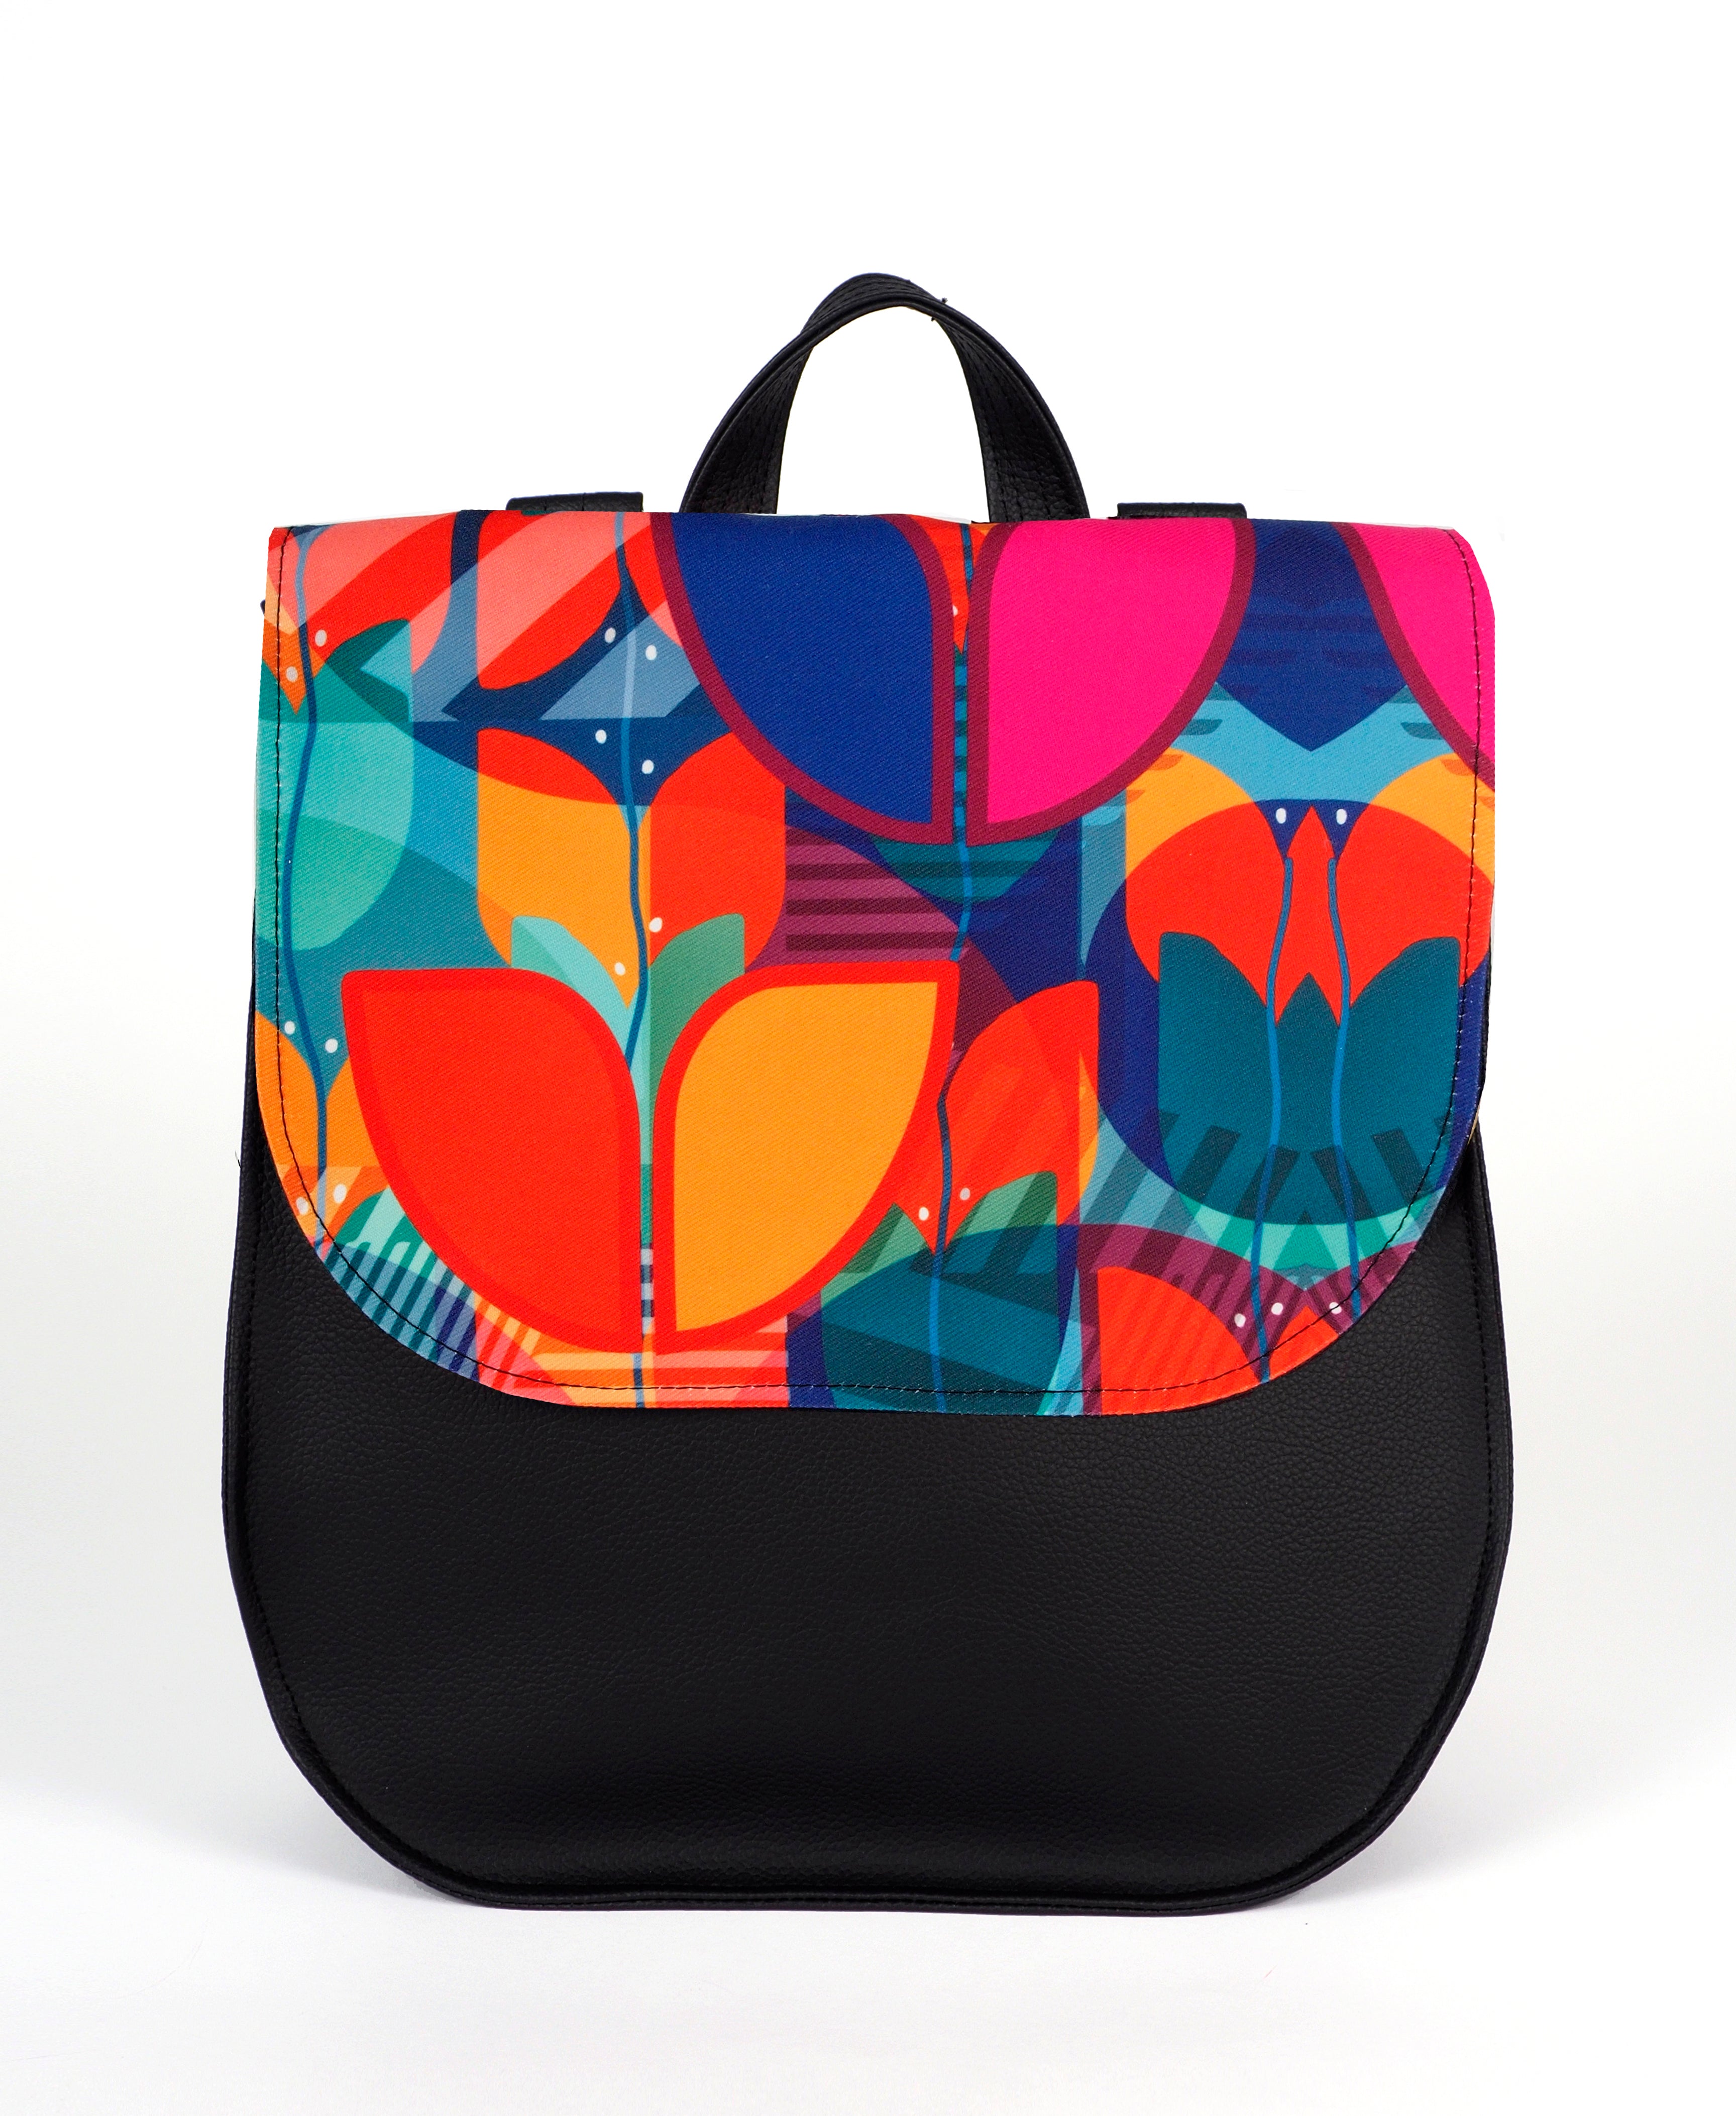 Bardo backpack&bag - Garden of Paradise - Premium bardo backpack&bag from BARDO ART WORKS - Just lvart bag, backpack, bag, black, floral, flowers, gift, green, handemade, messenger, nature, red, urban style, vegan leather, woman85.00! Shop now at BARDO ART WORKS